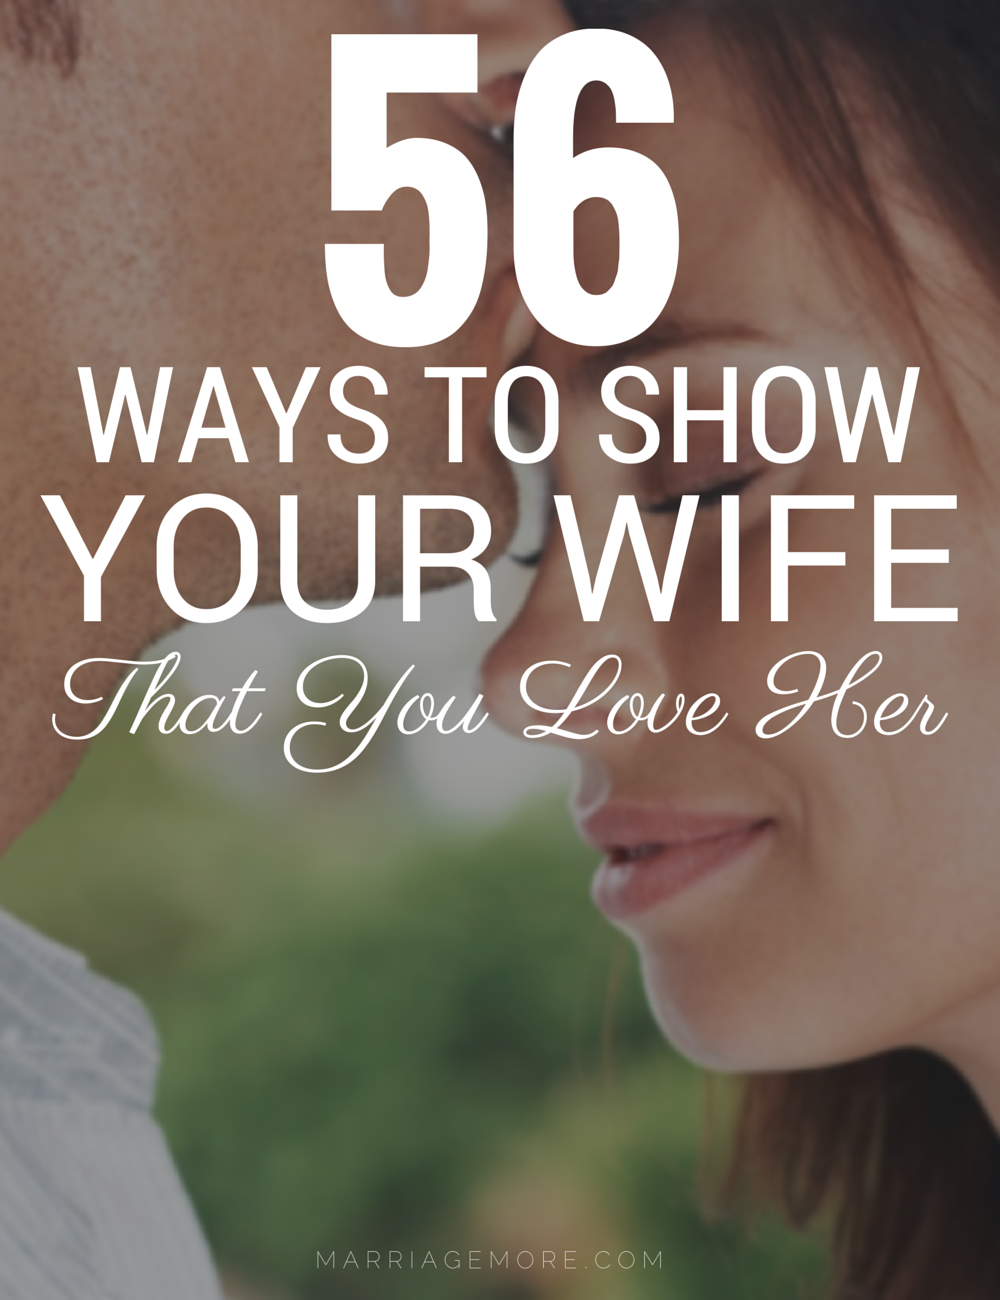 You show wife ways her to love 30 Ways